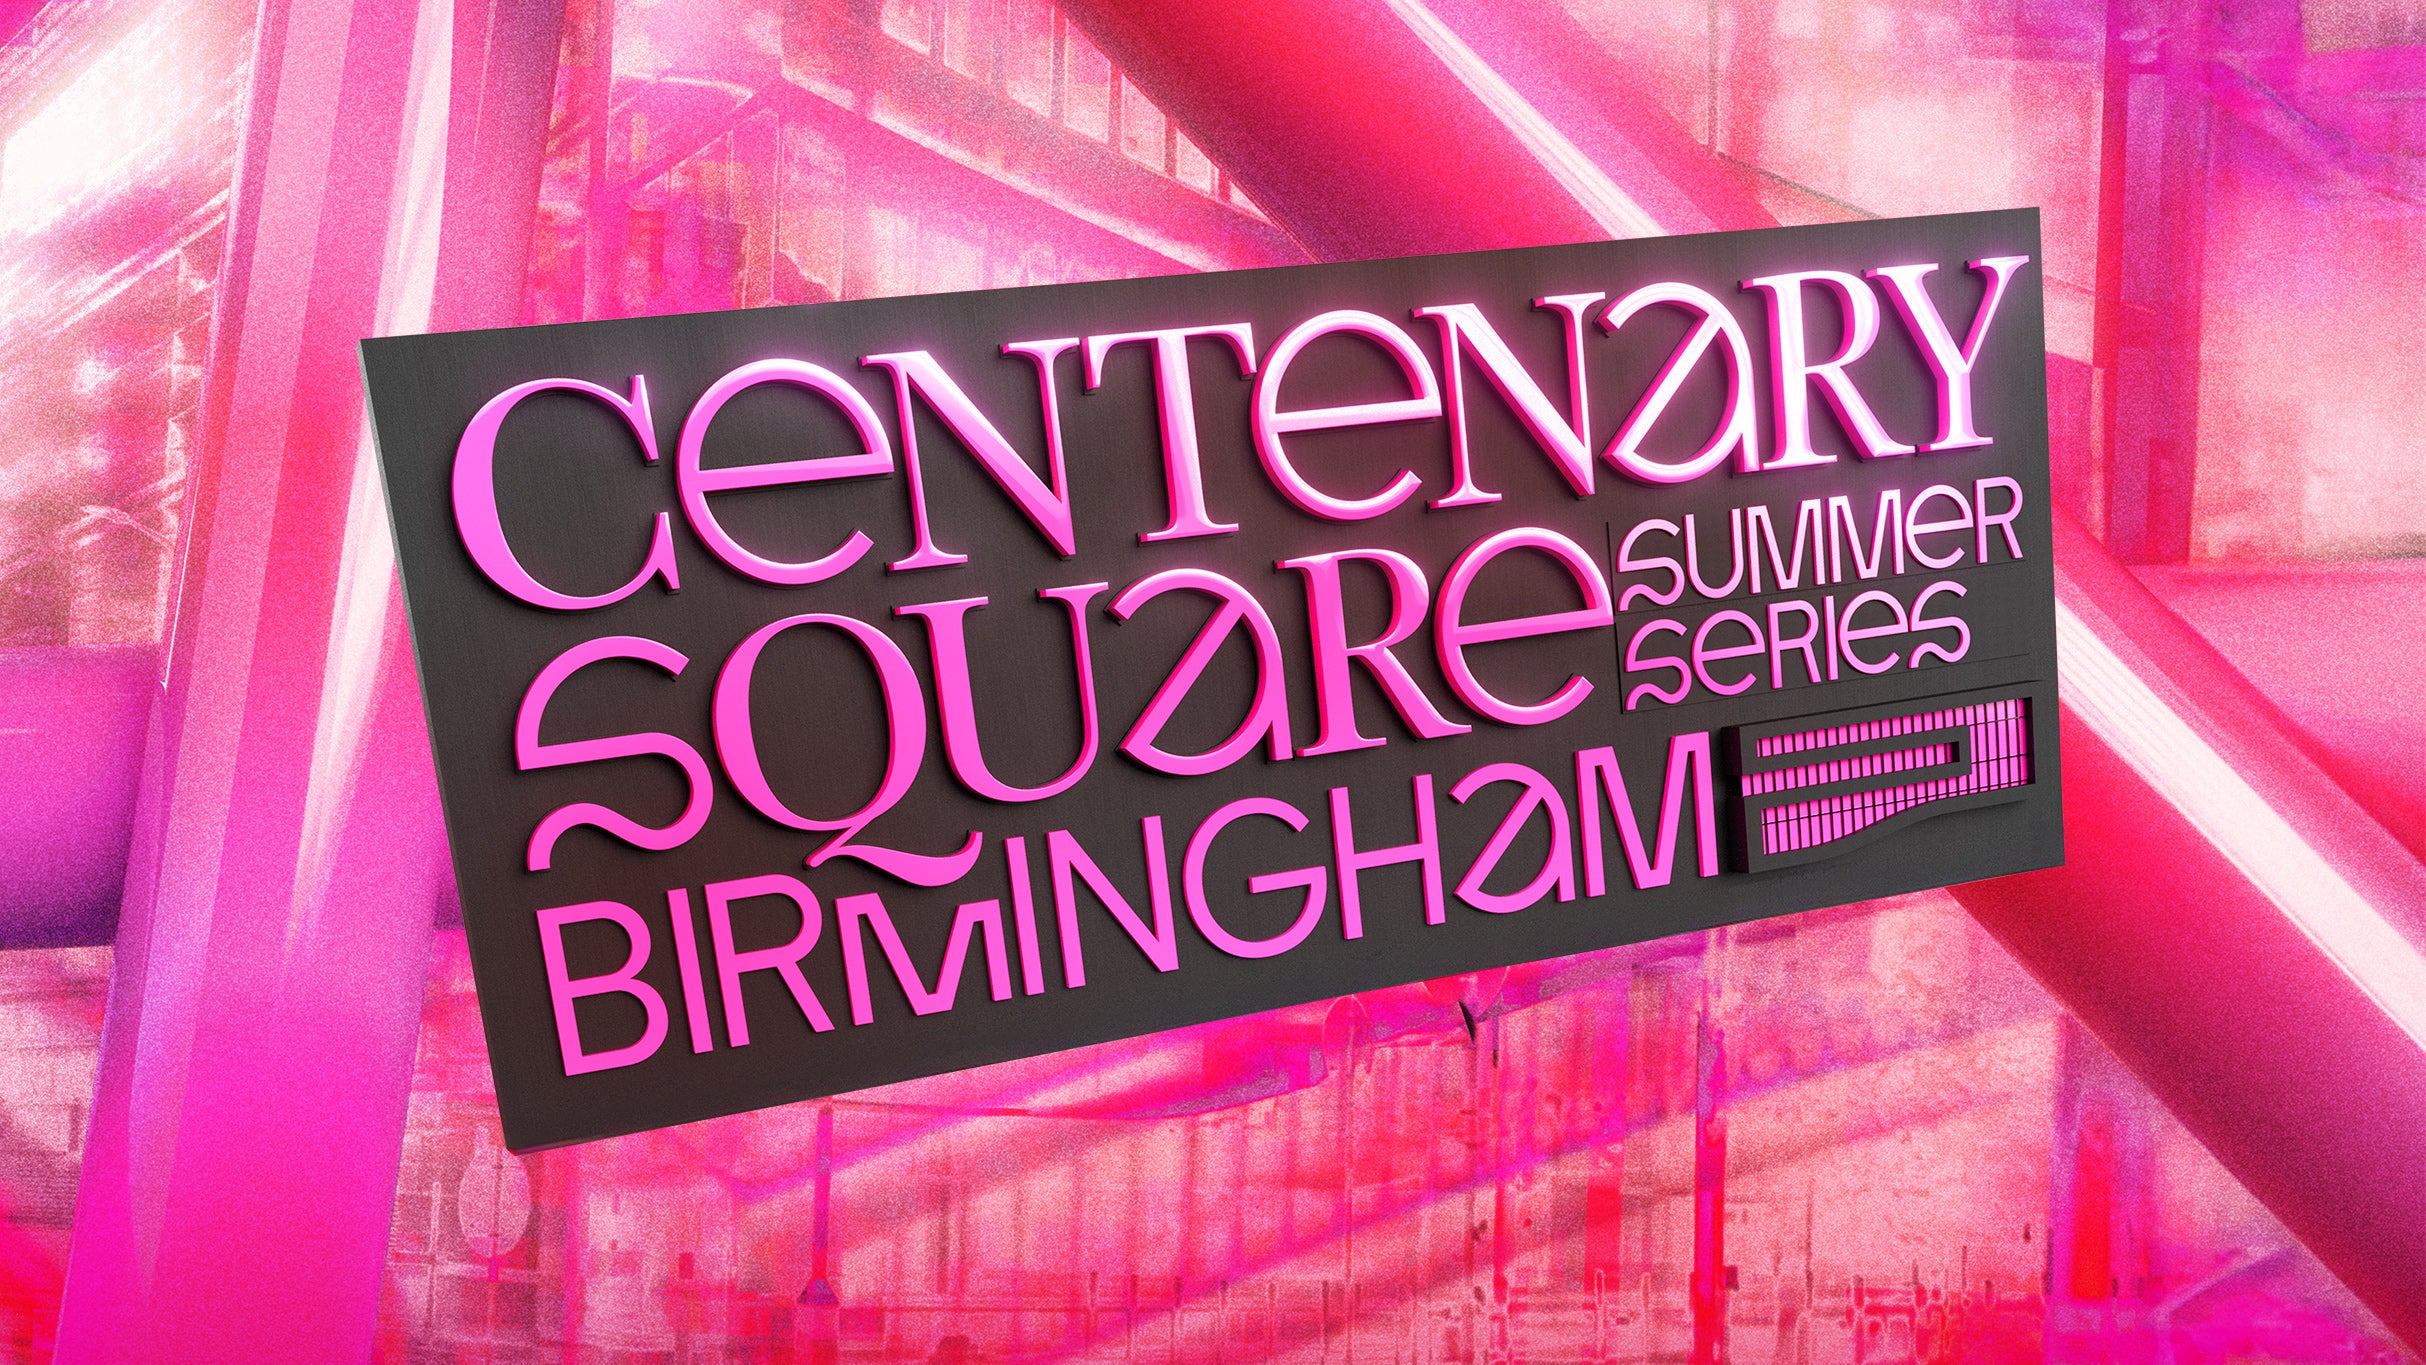 Centenary Square Summer Series: Jungle in Birmingham promo photo for Ticketmaster presale offer code